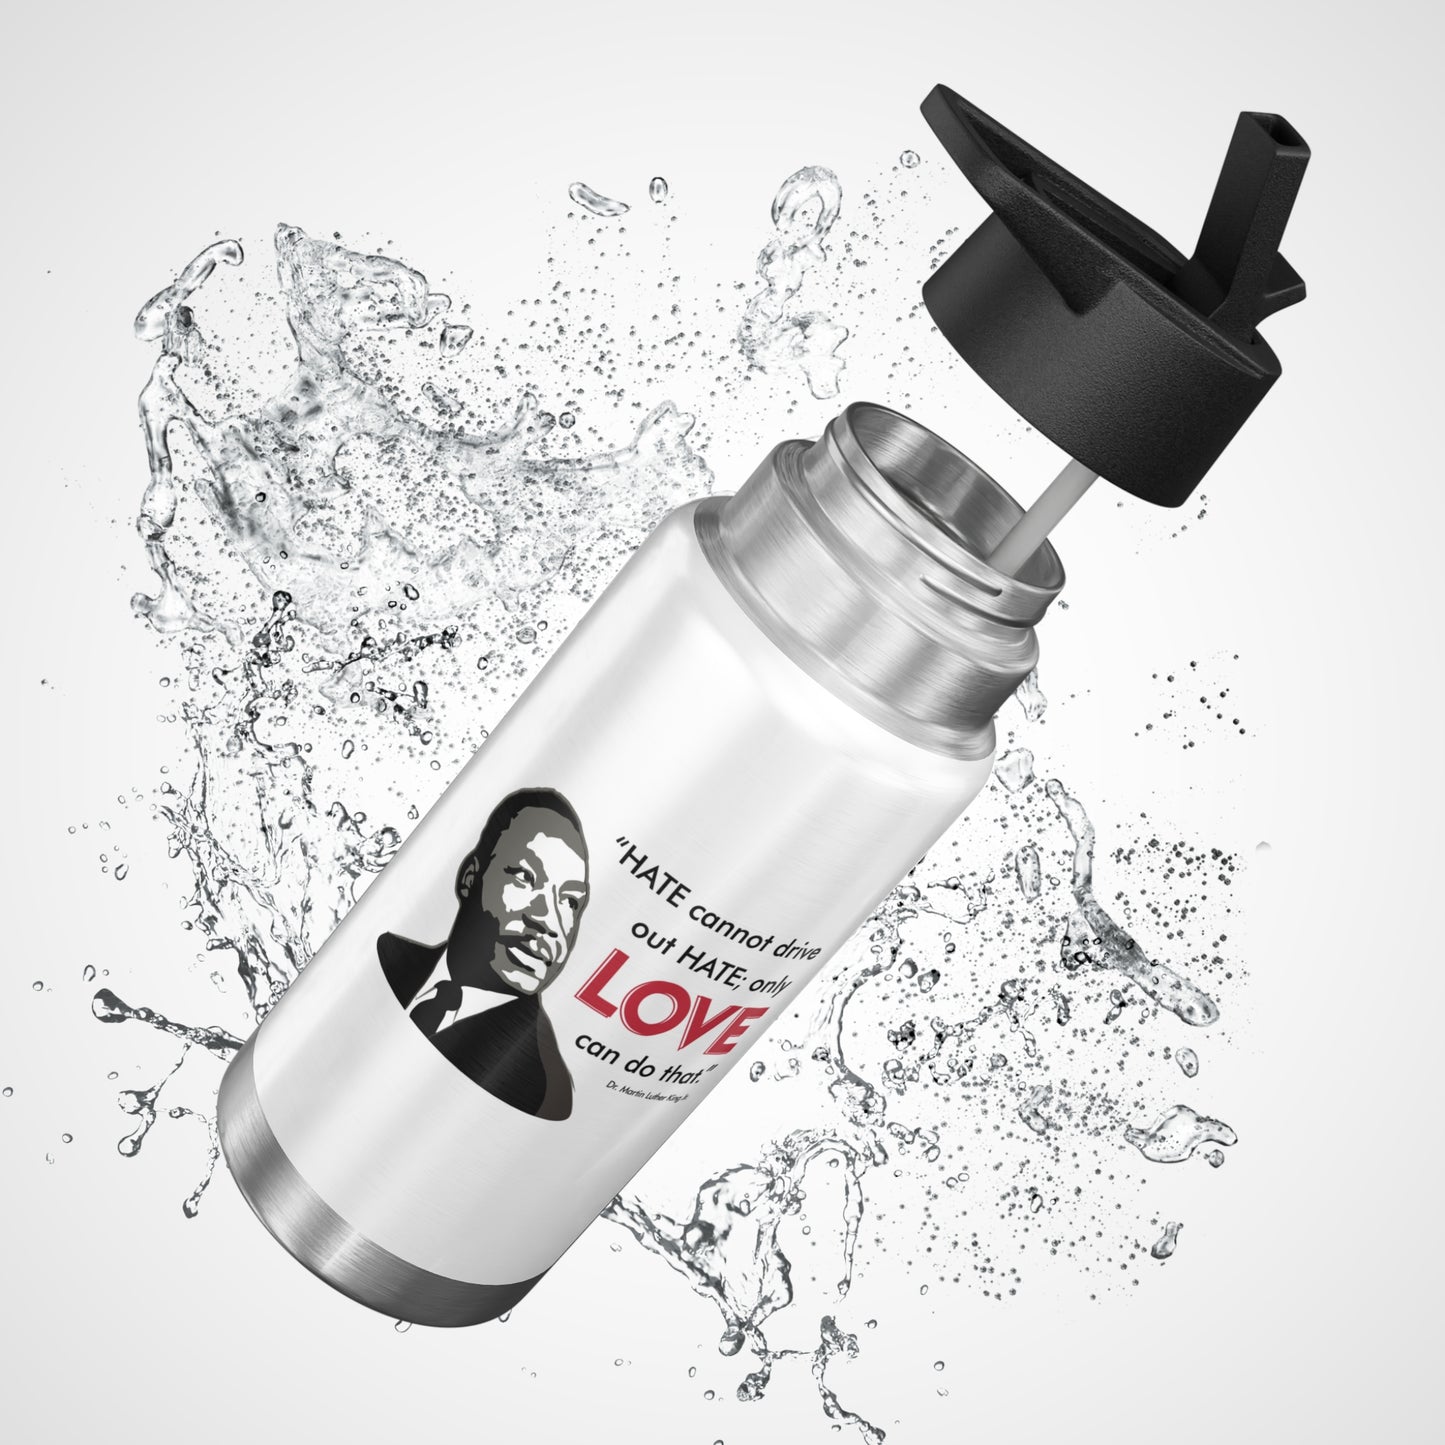 “MLK Love” 32 oz. Tumbler/Water Bottle